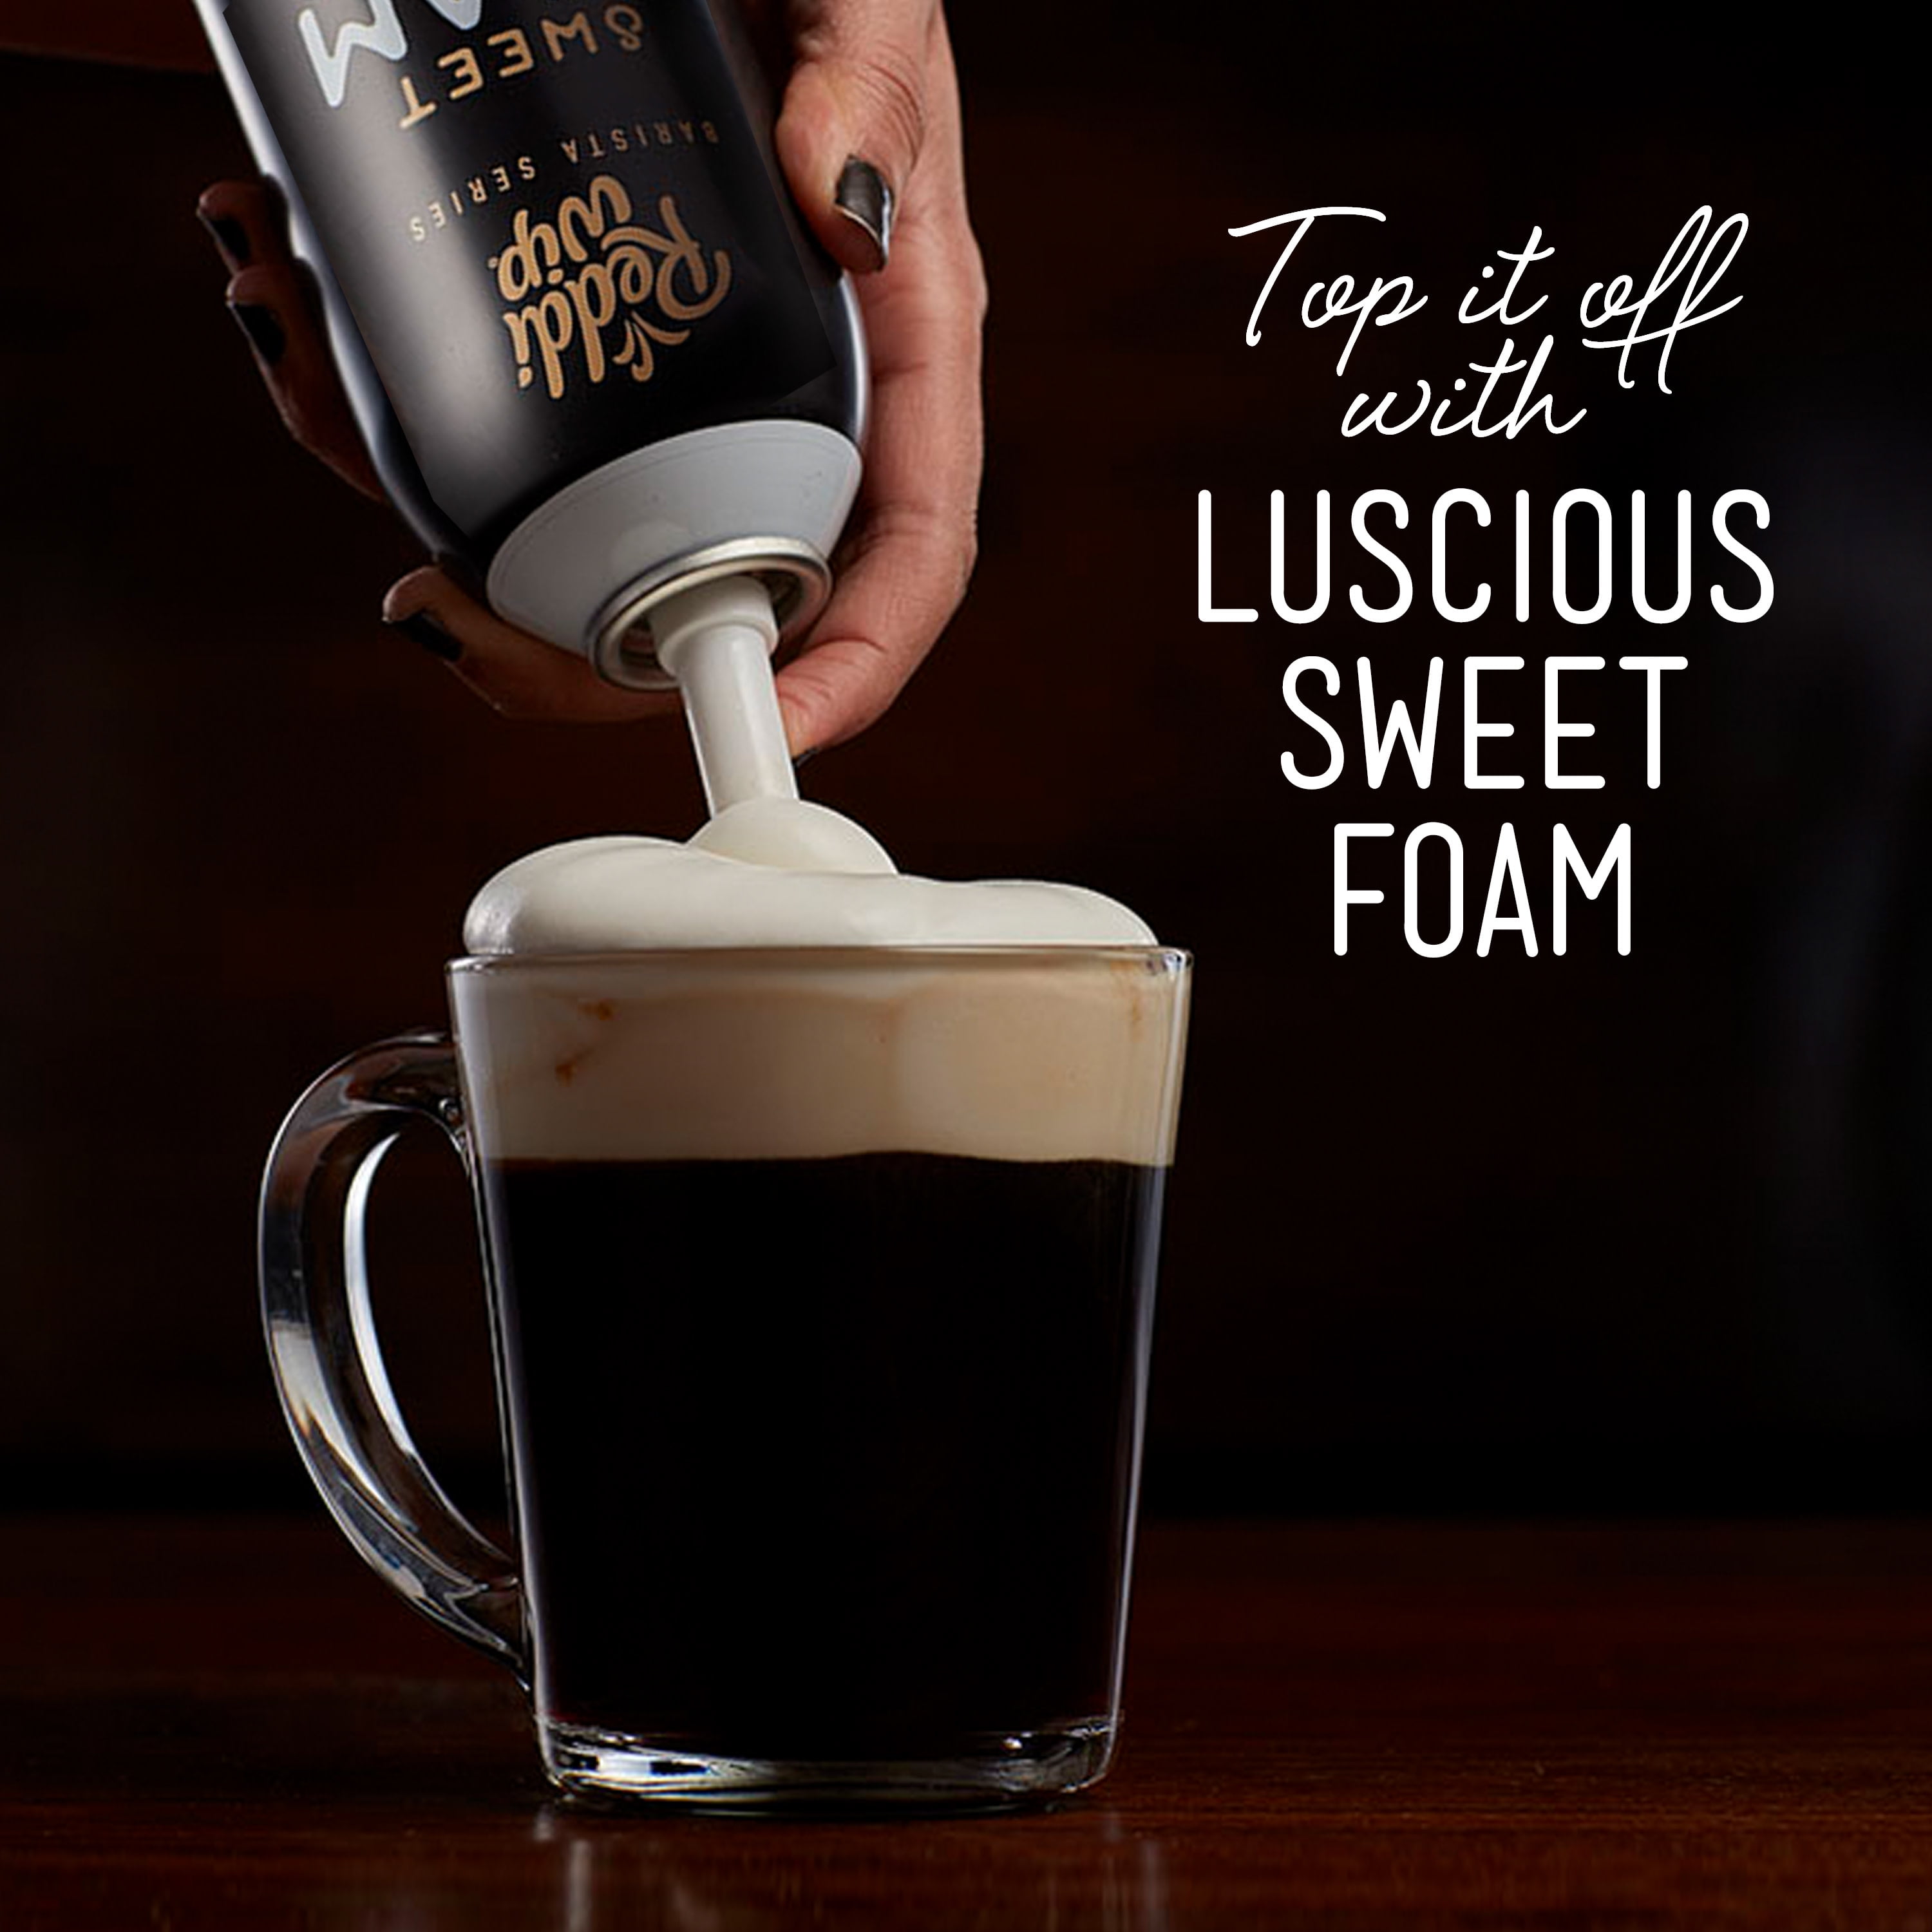 Reddi-wip Barista Series Sweet Foam Coffee Topper, 13 oz.